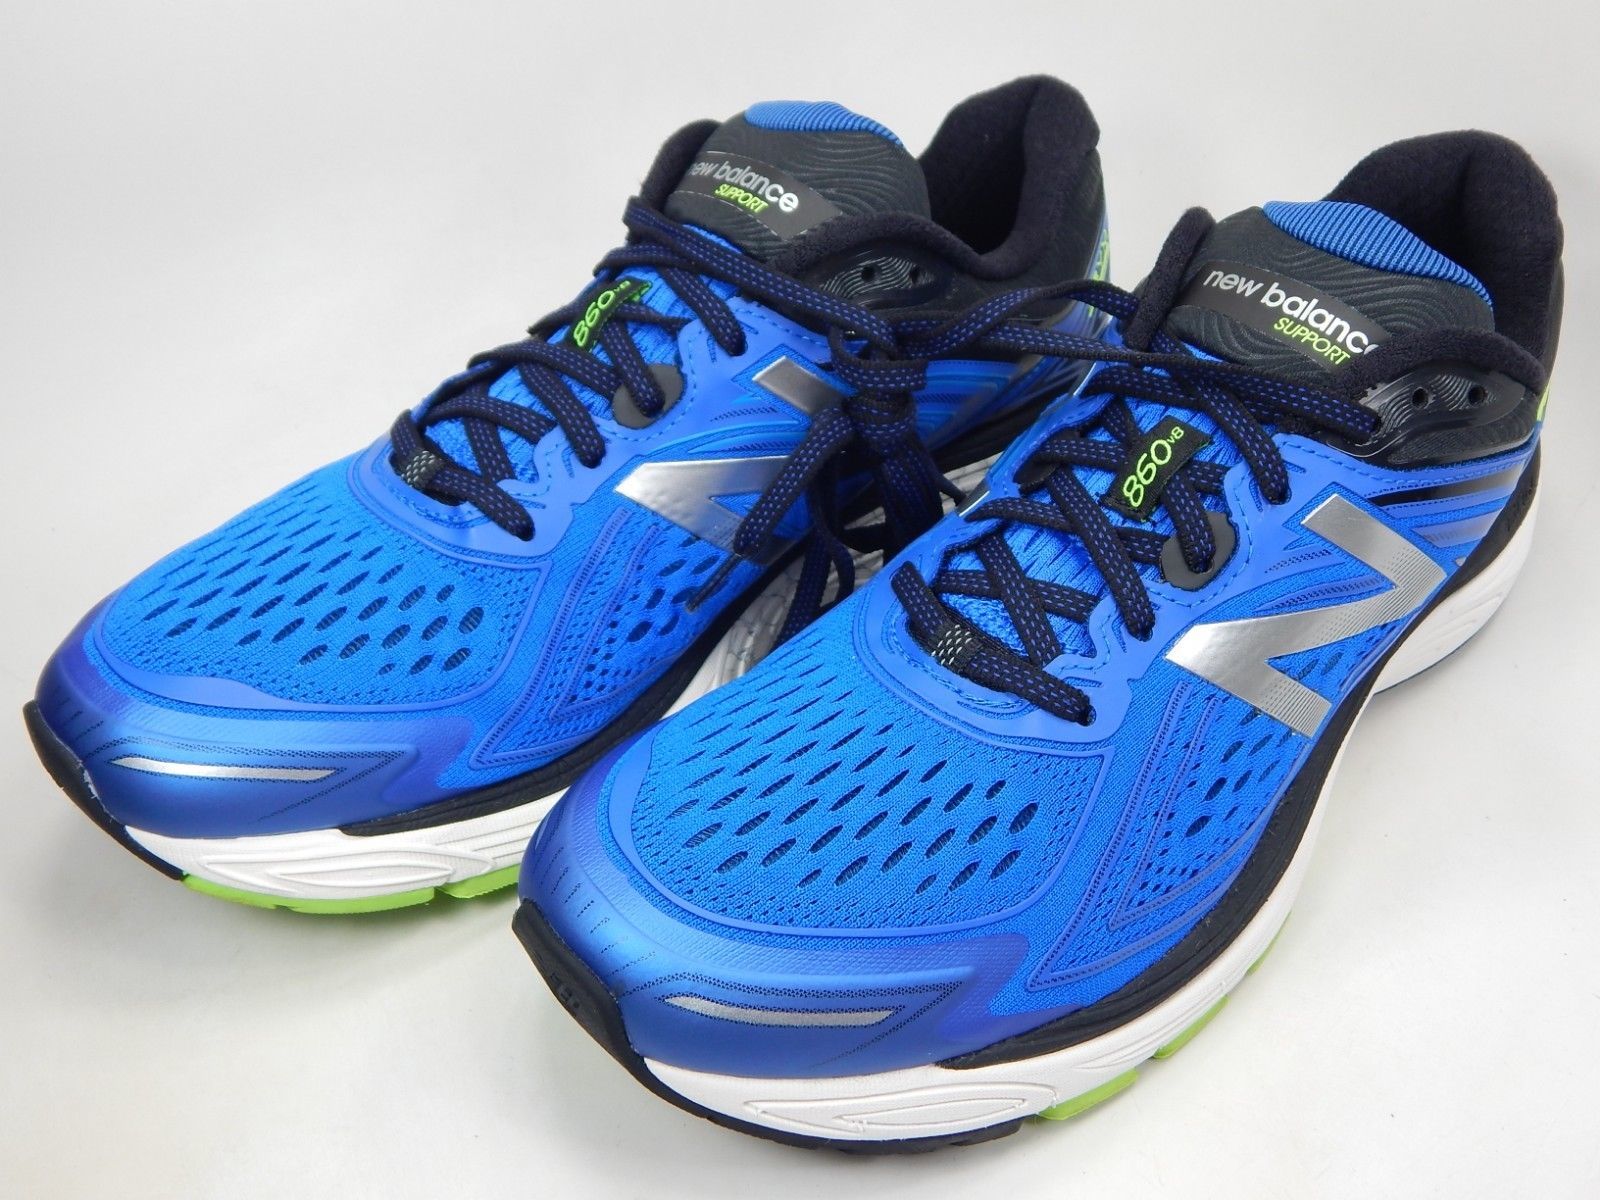 New Balance 860 v8 Size 11.5 M (D) EU 45.5 Mens Running Shoes Blue ...